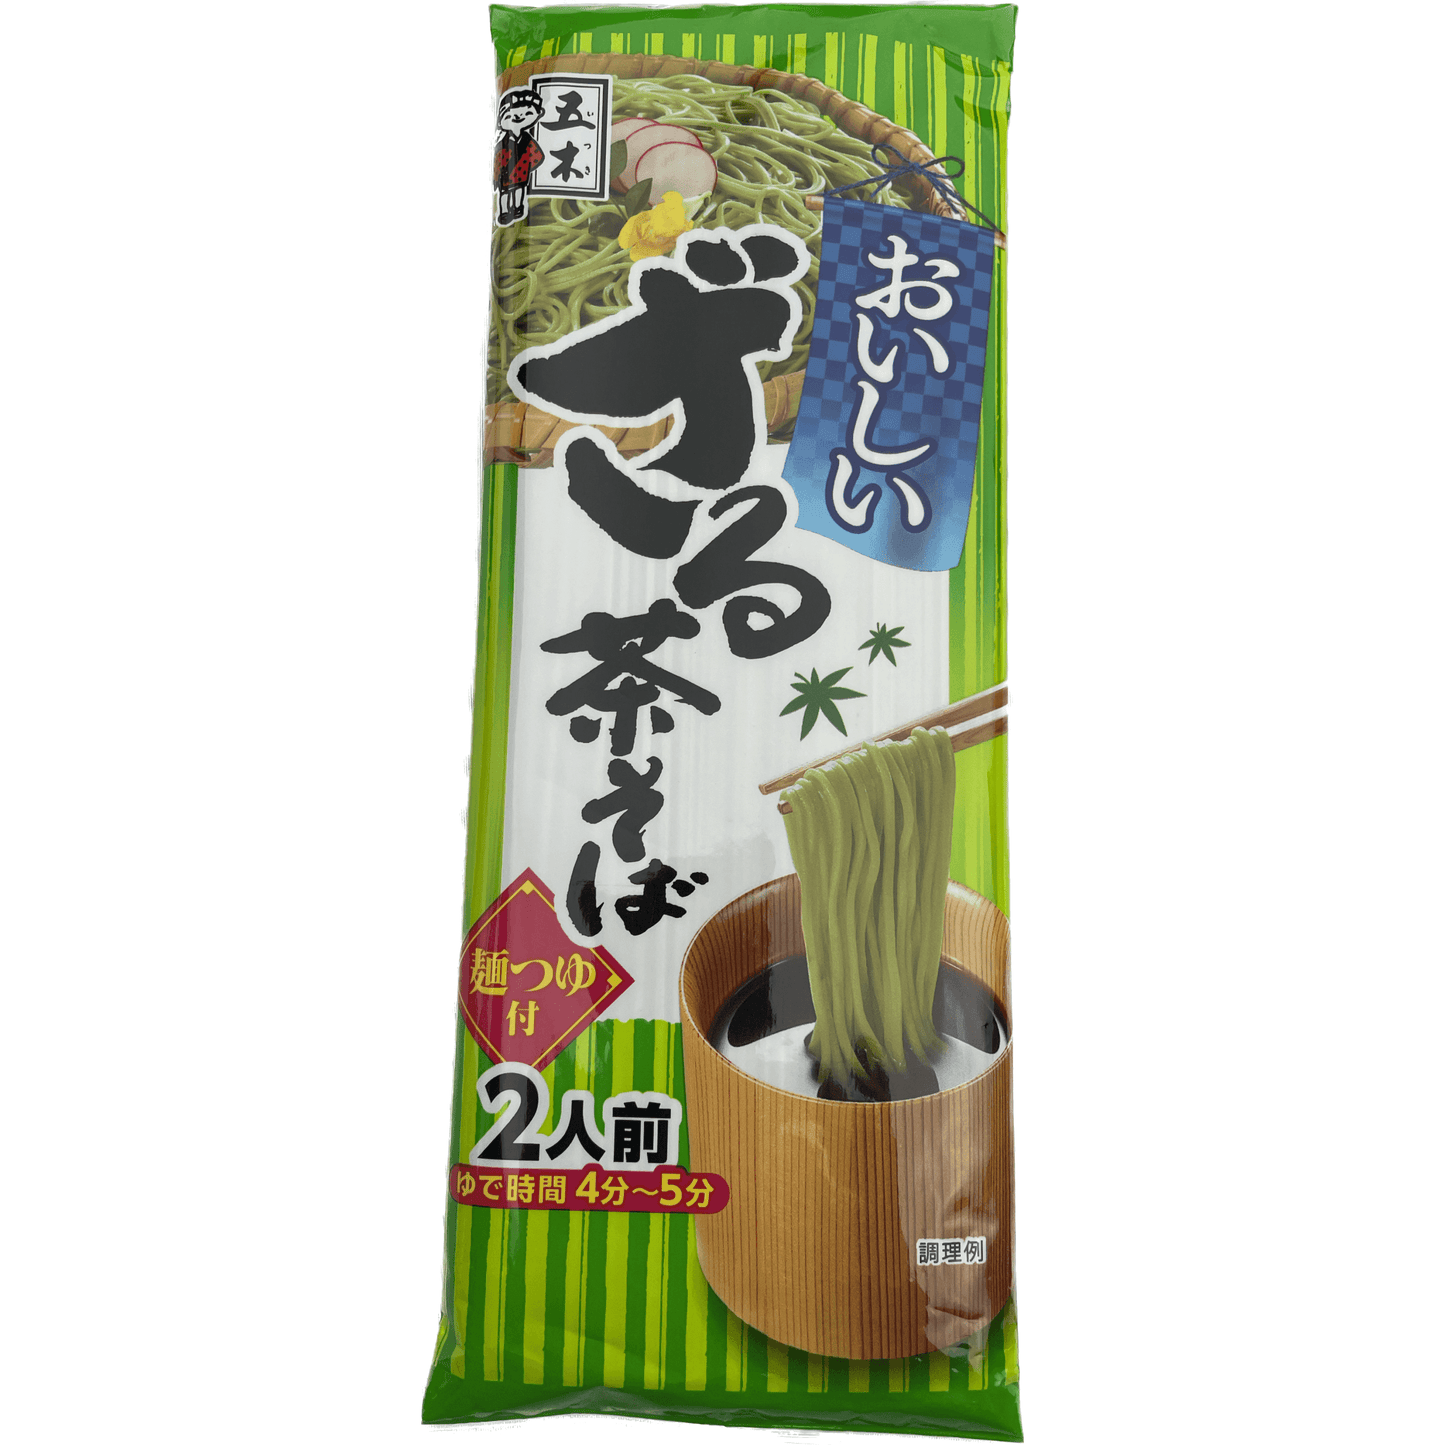 Itsuki Delicious Zaru Tea Soba Noodles for 2 People五木　おいしいざる茶そば　2人前 - RiceWineShop